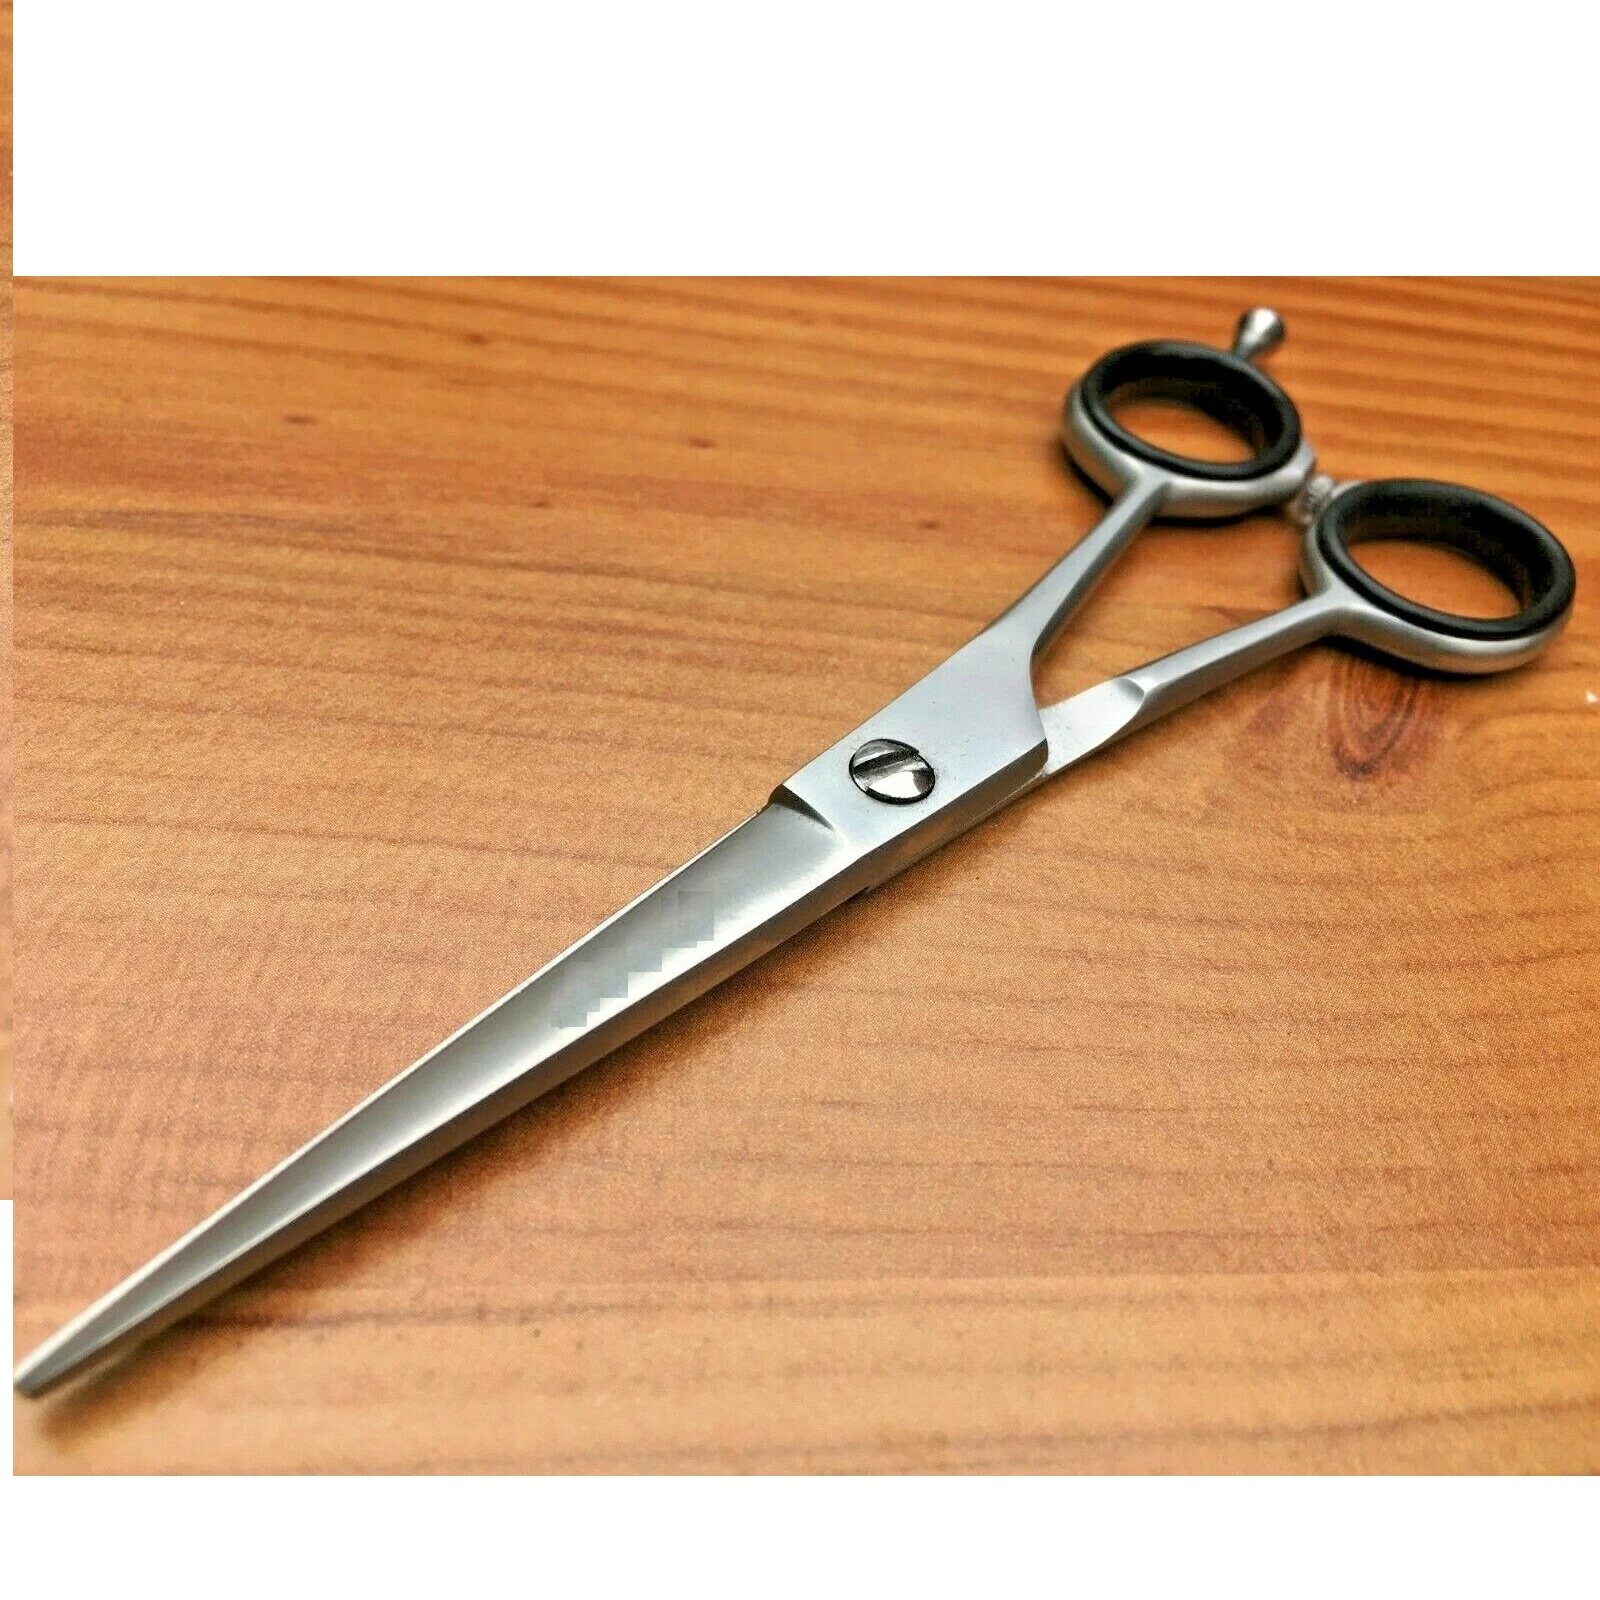 Shears Professional Hairdressing Hair Cutting Scissors serrated Edge Barber Shears 7"